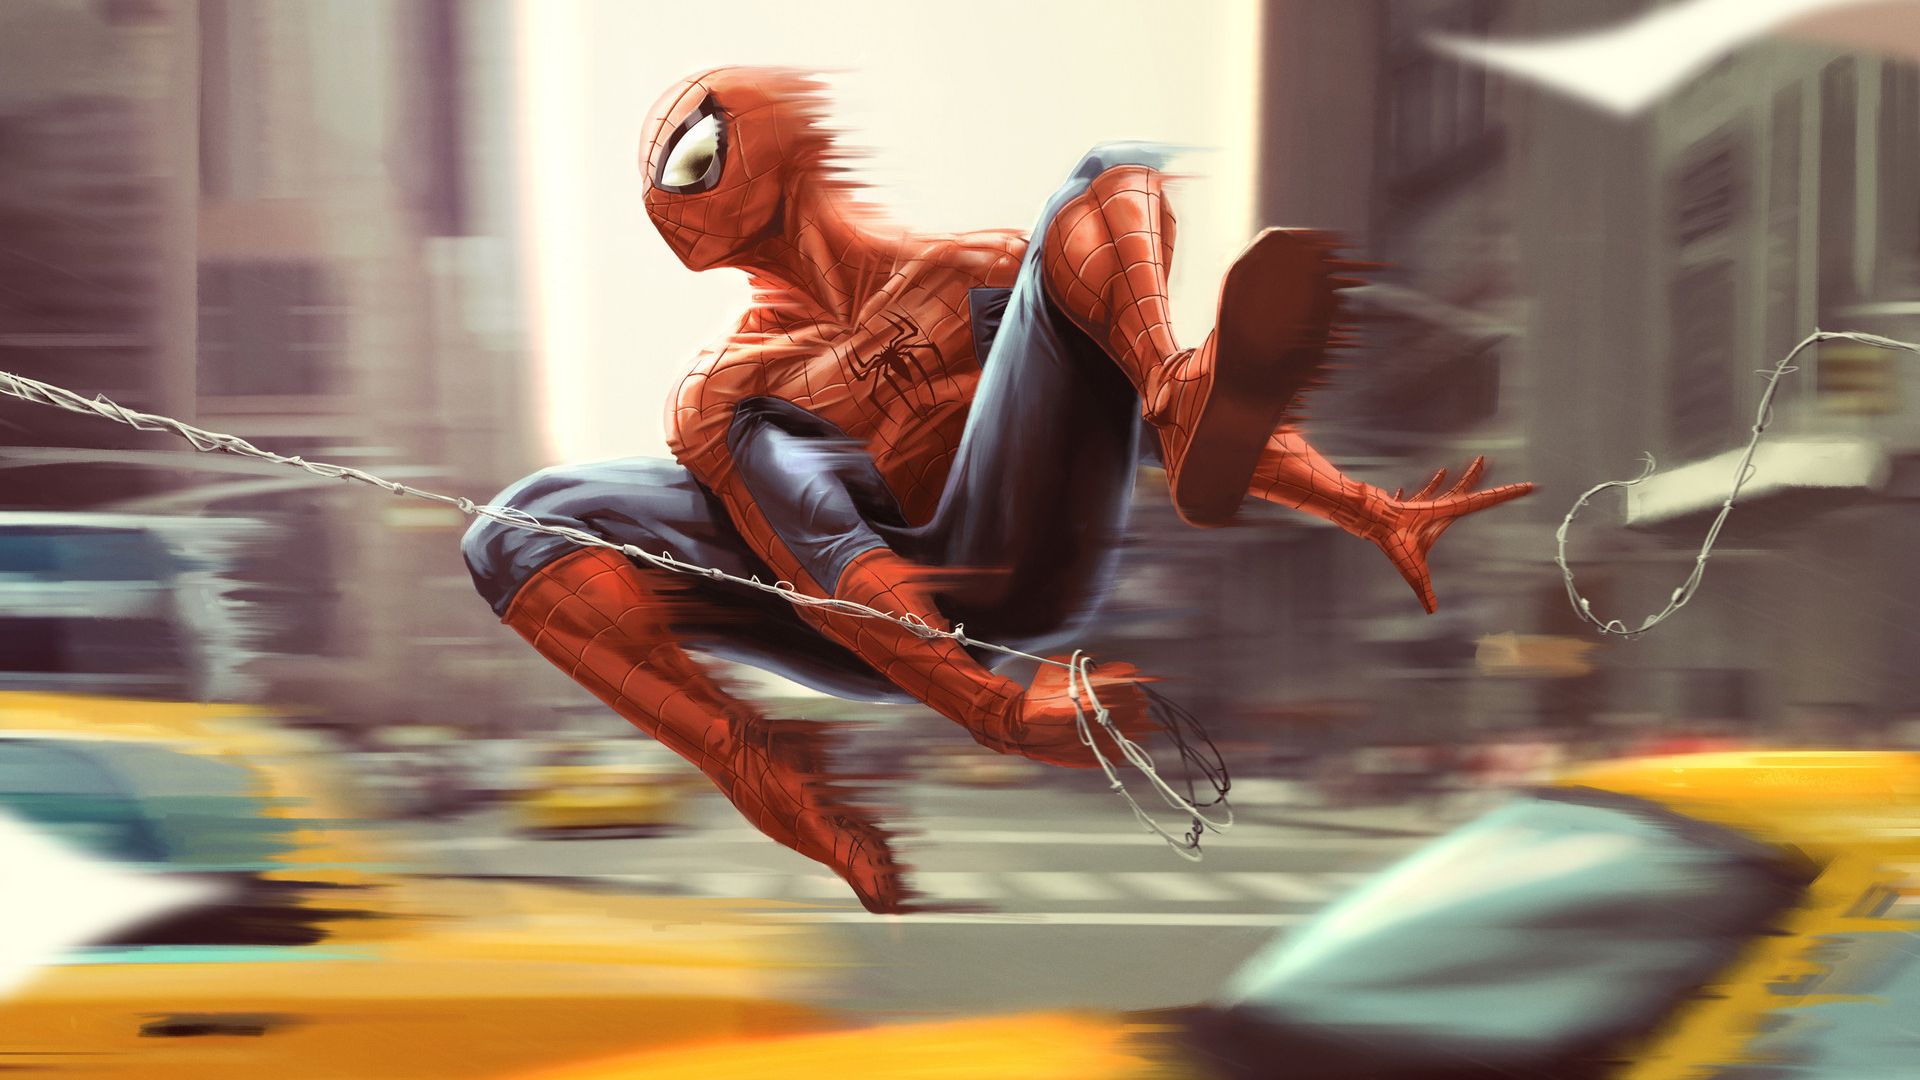 SpiderMan Swinging  iPhone Wallpaper My Design by Batboy101 on  DeviantArt